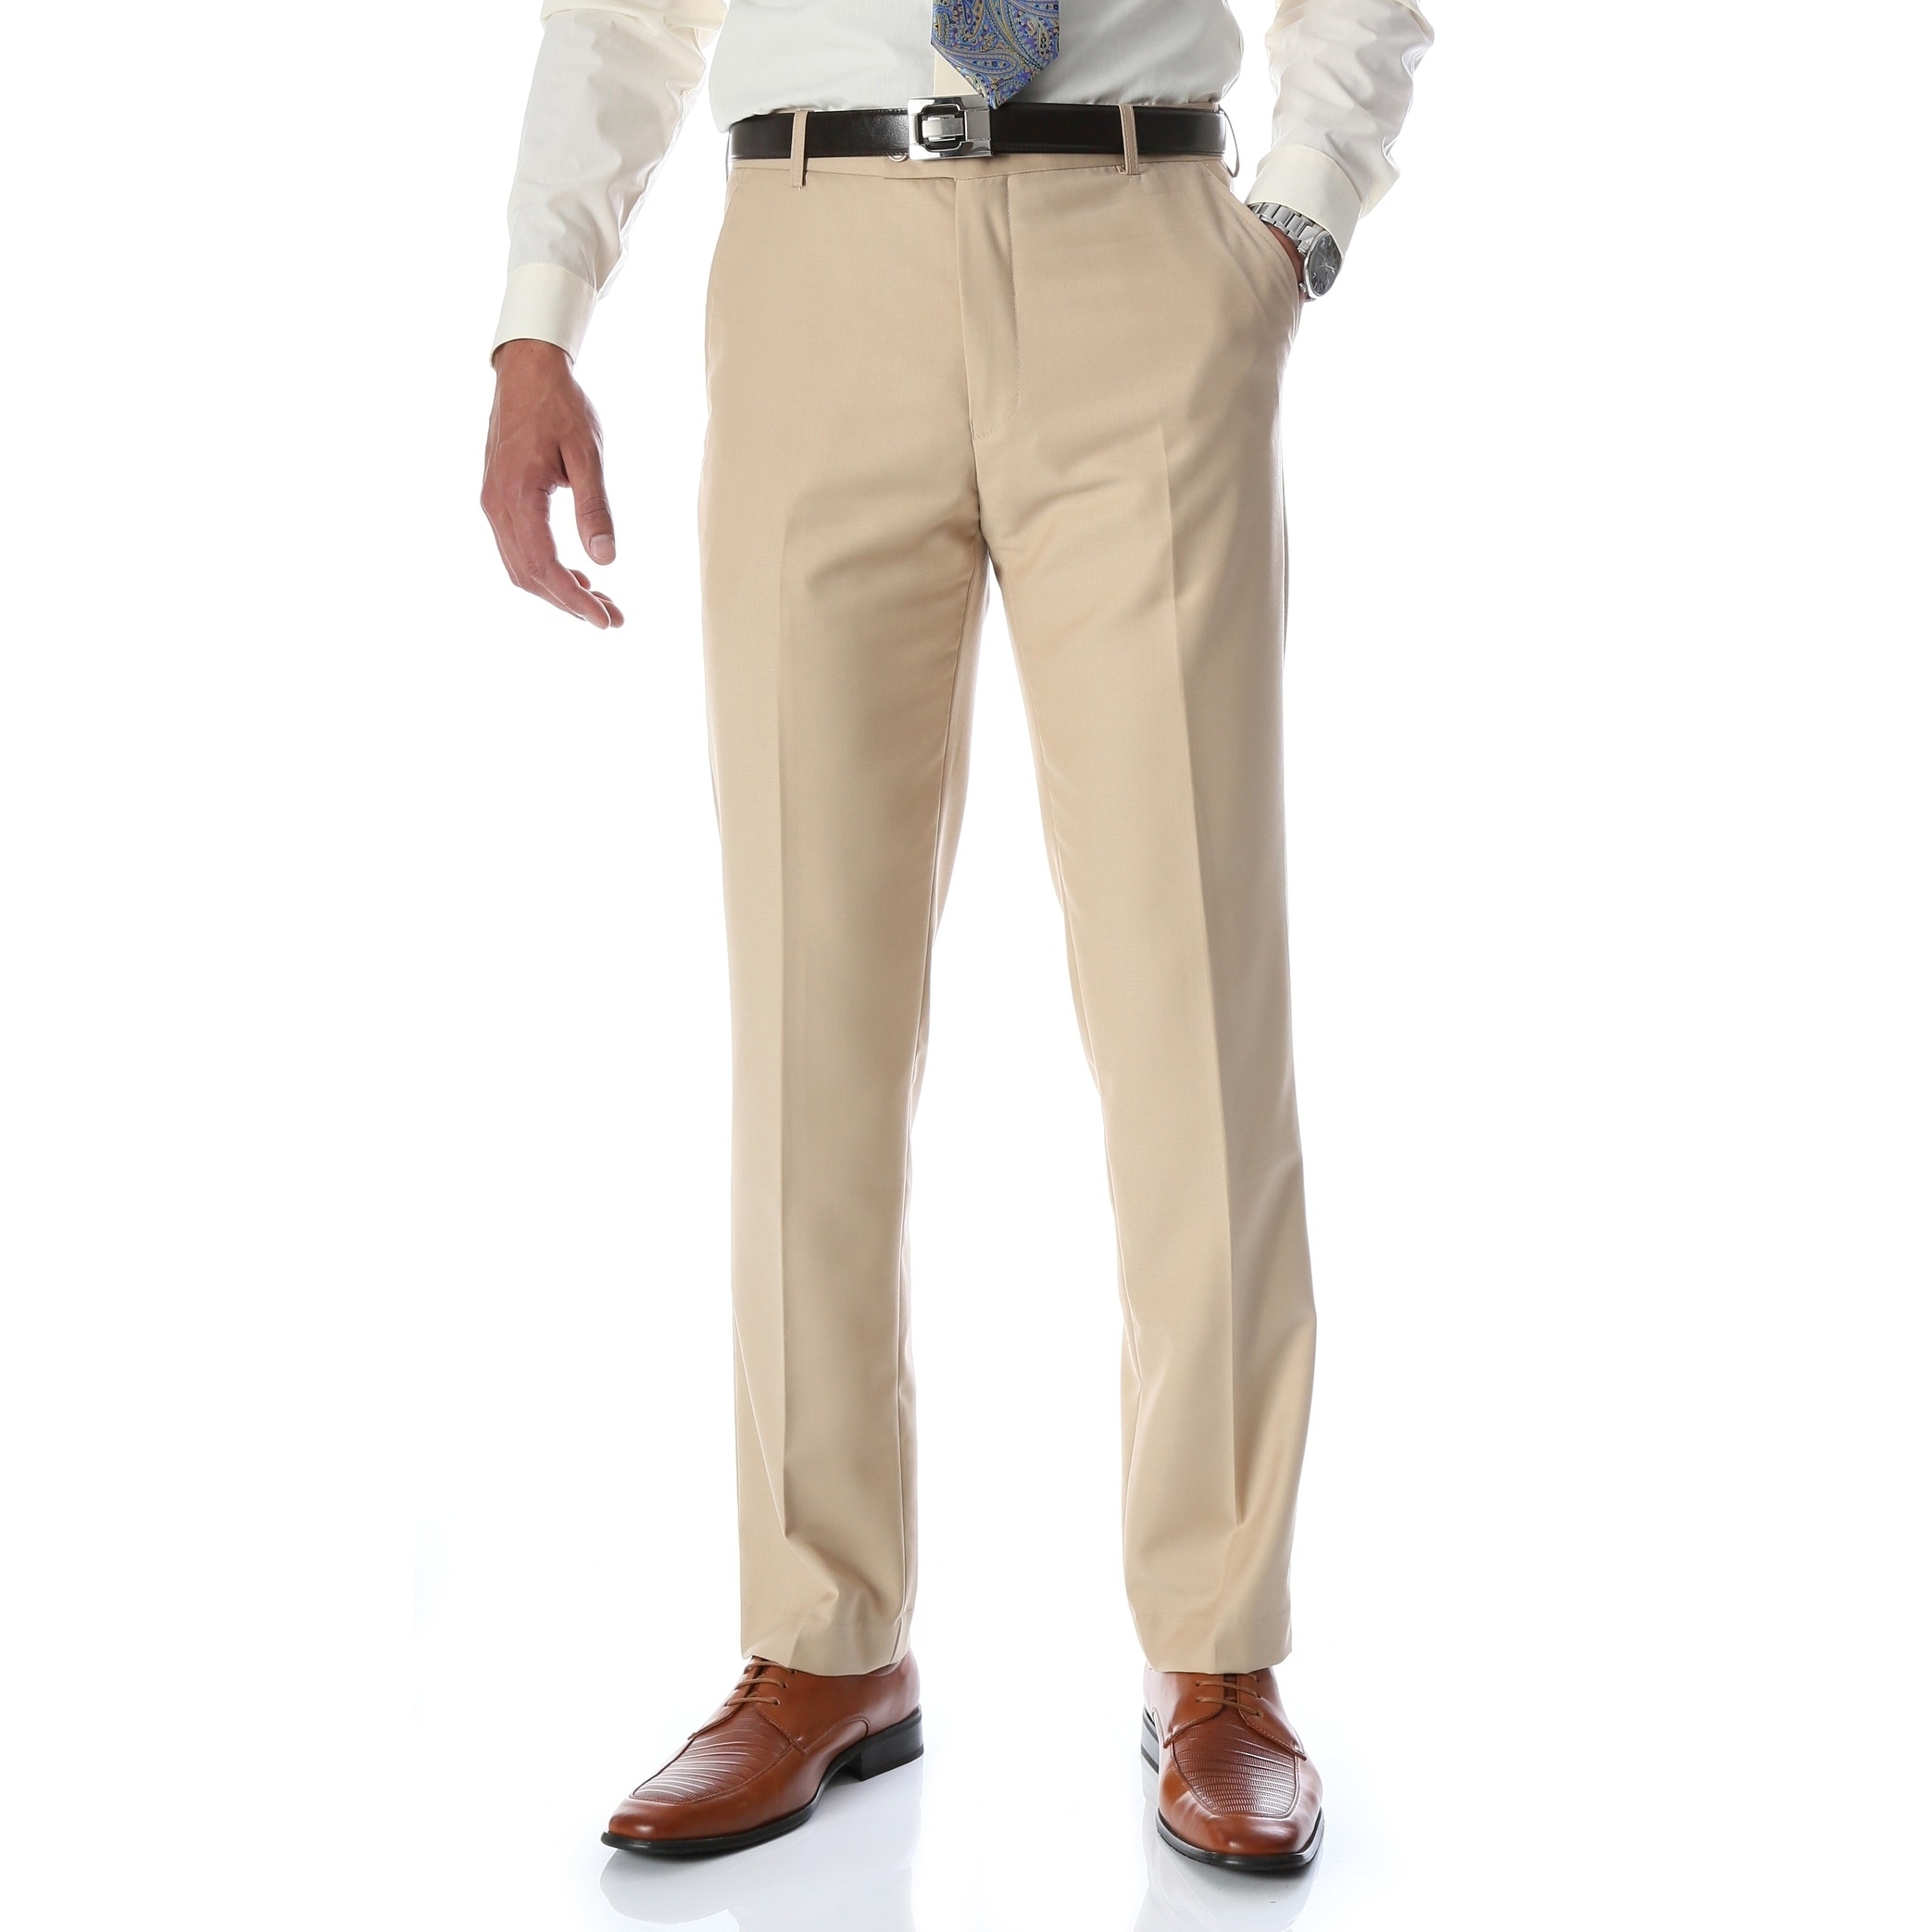 Ferrecci Men's Halo Tan Slim Fit Flat-Front Dress Pants